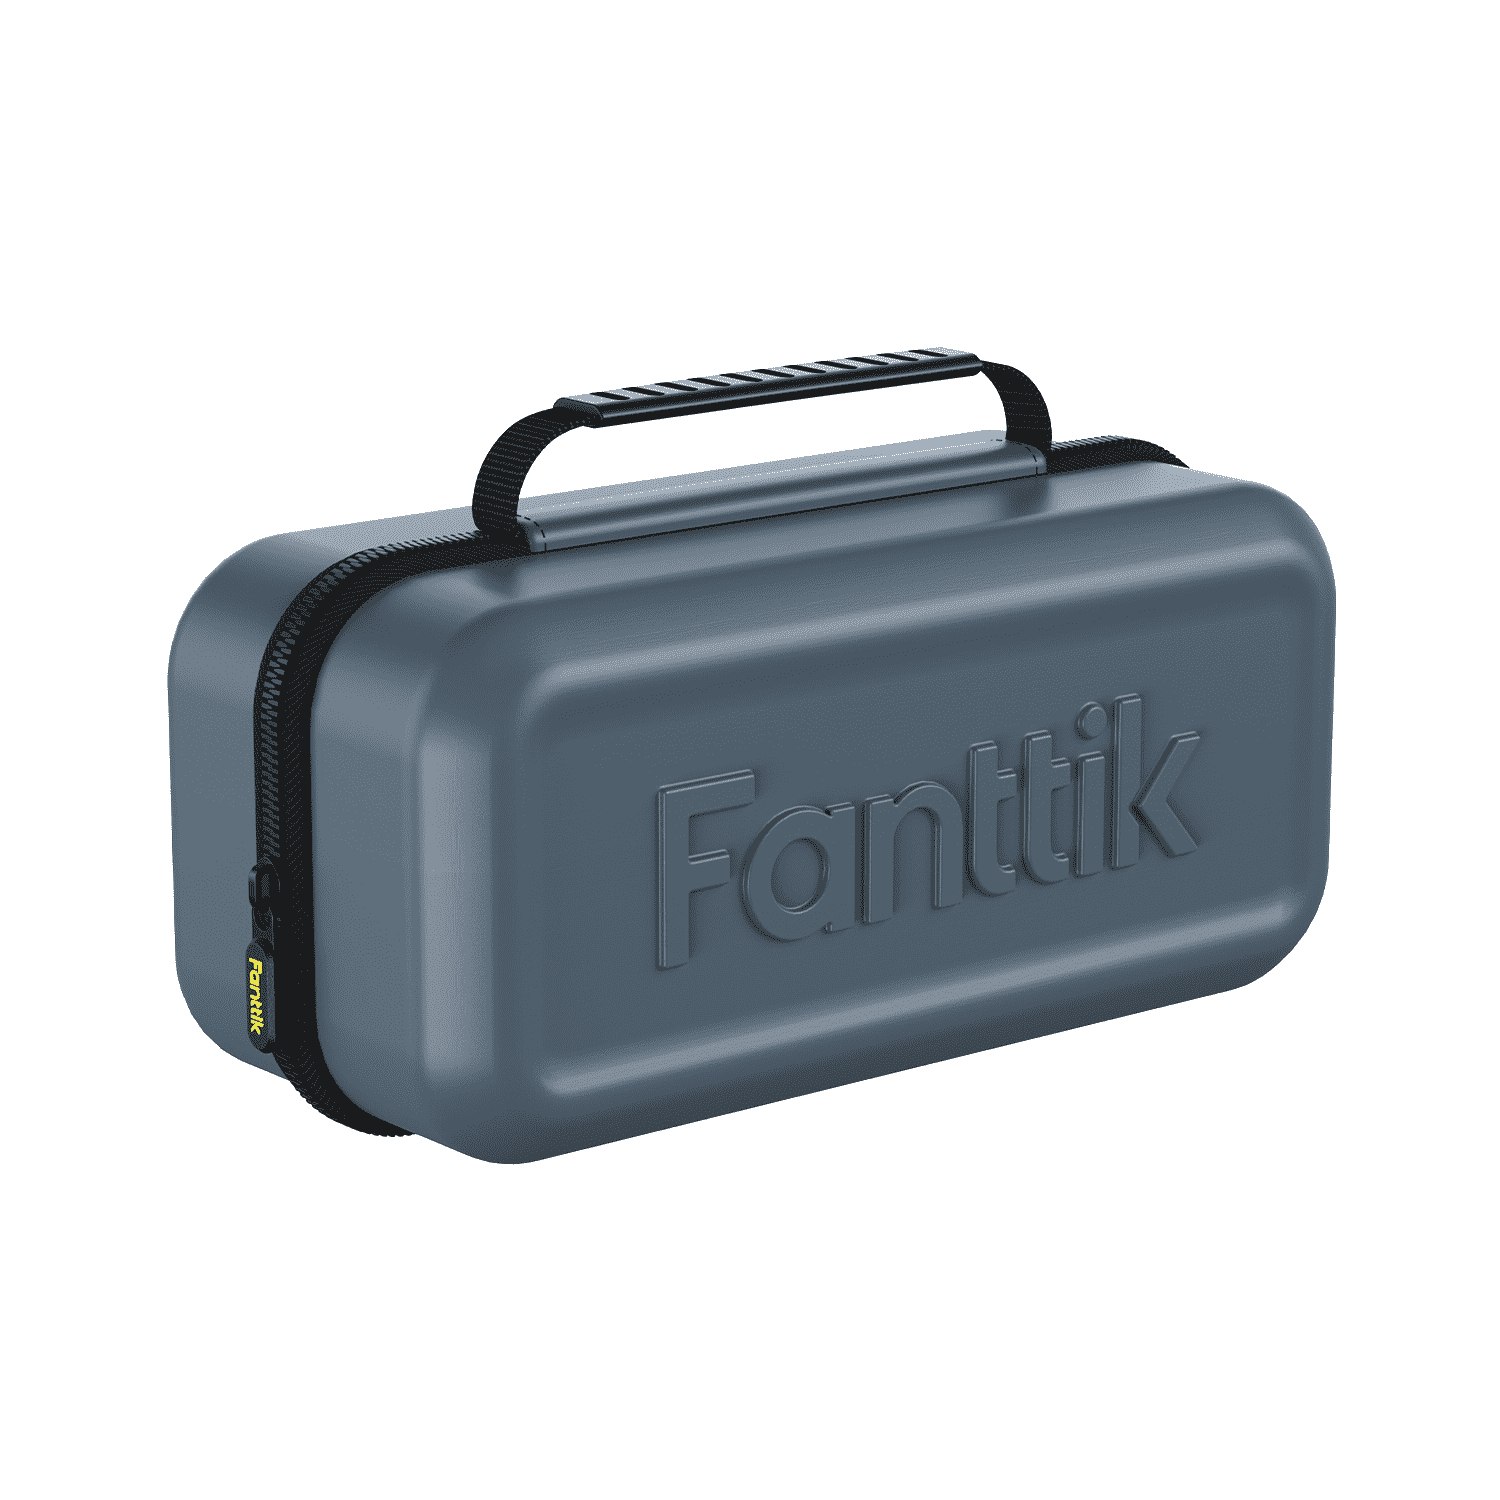 Portable EVA Protection Case for Fanttik T8 Jump Starter